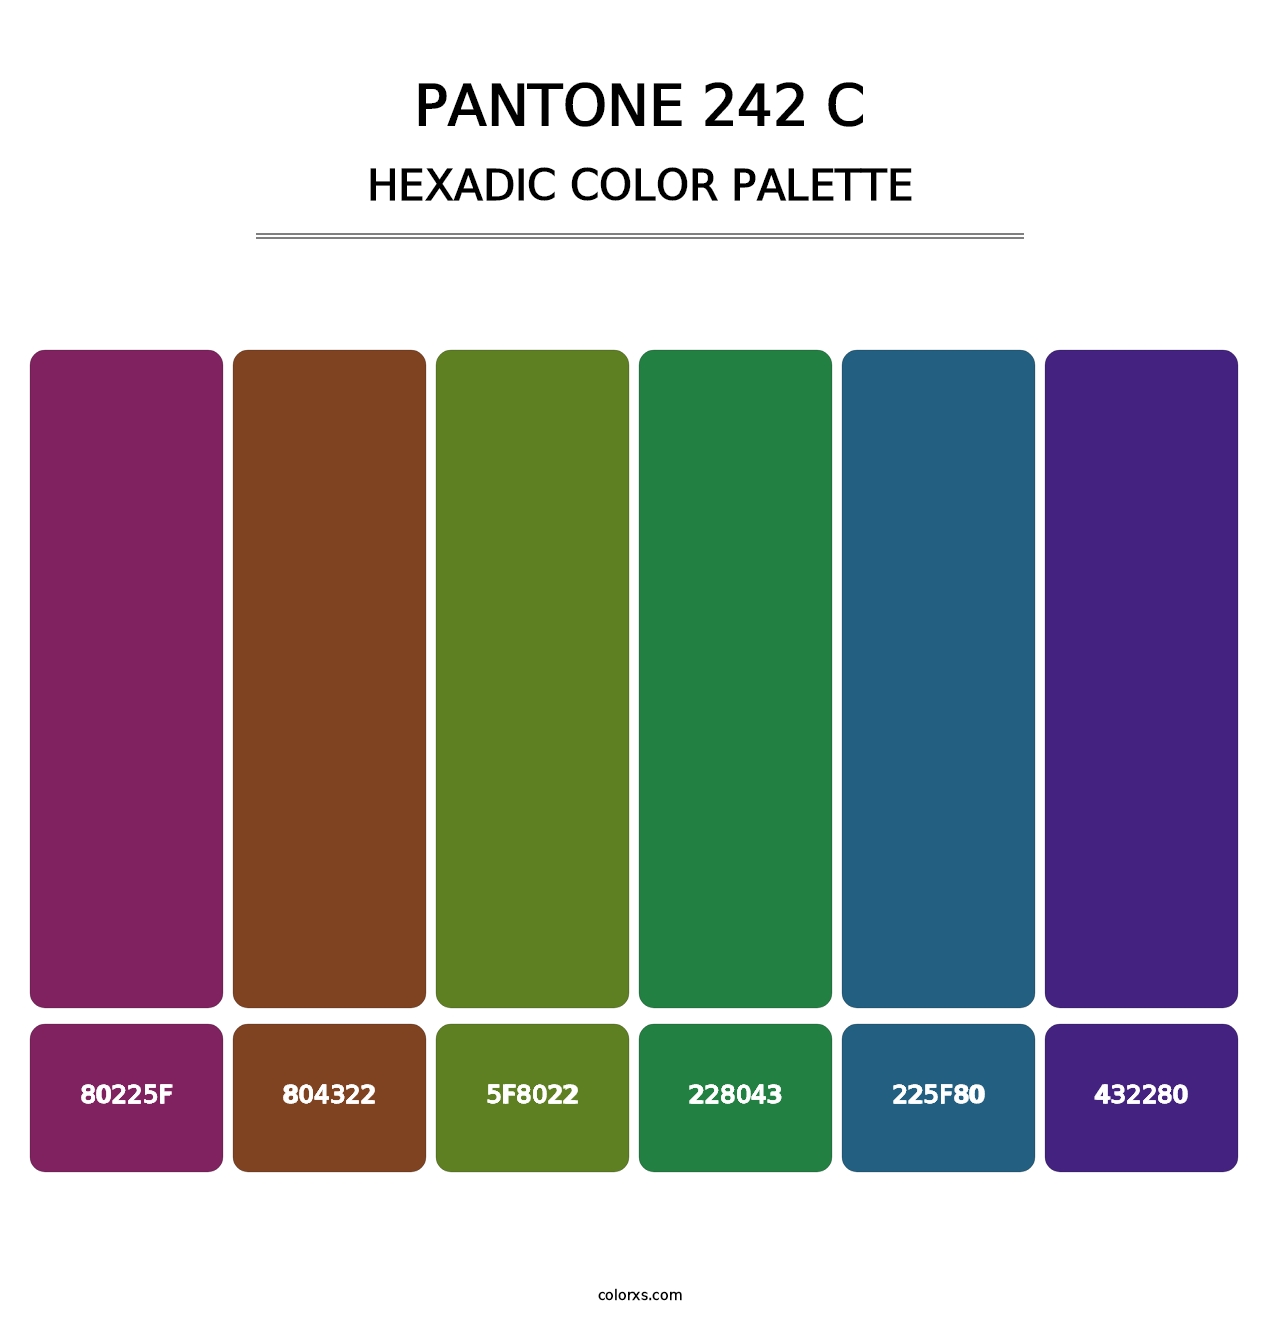 PANTONE 242 C - Hexadic Color Palette